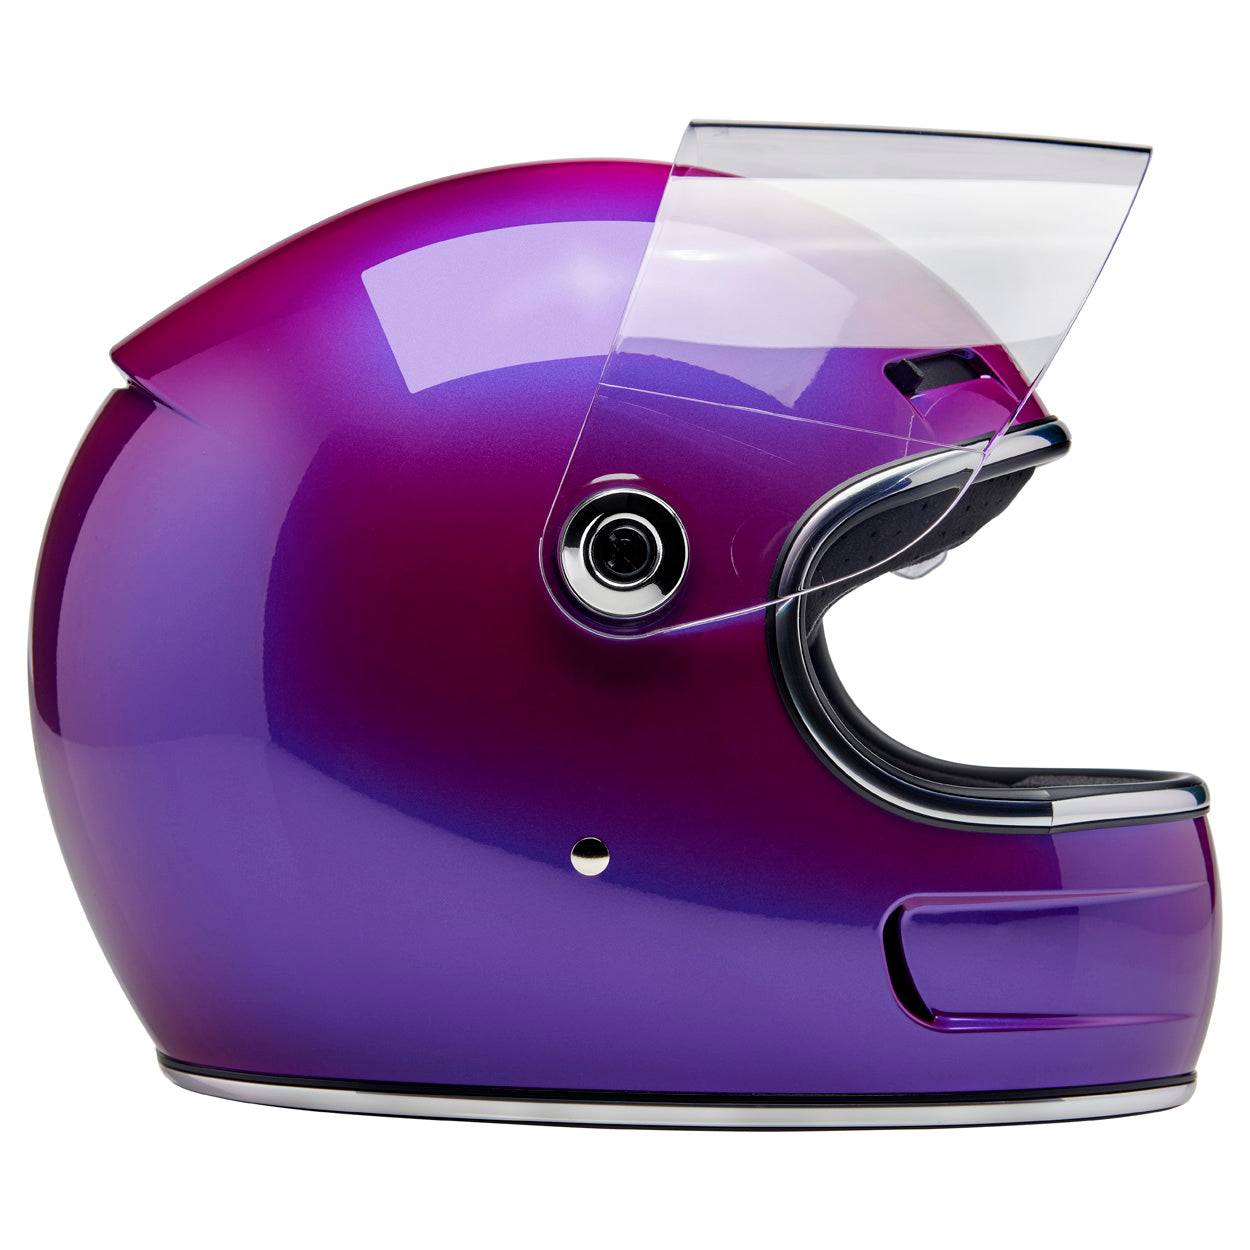 Gringo SV ECE R22.06 Helmet - Metallic Grape